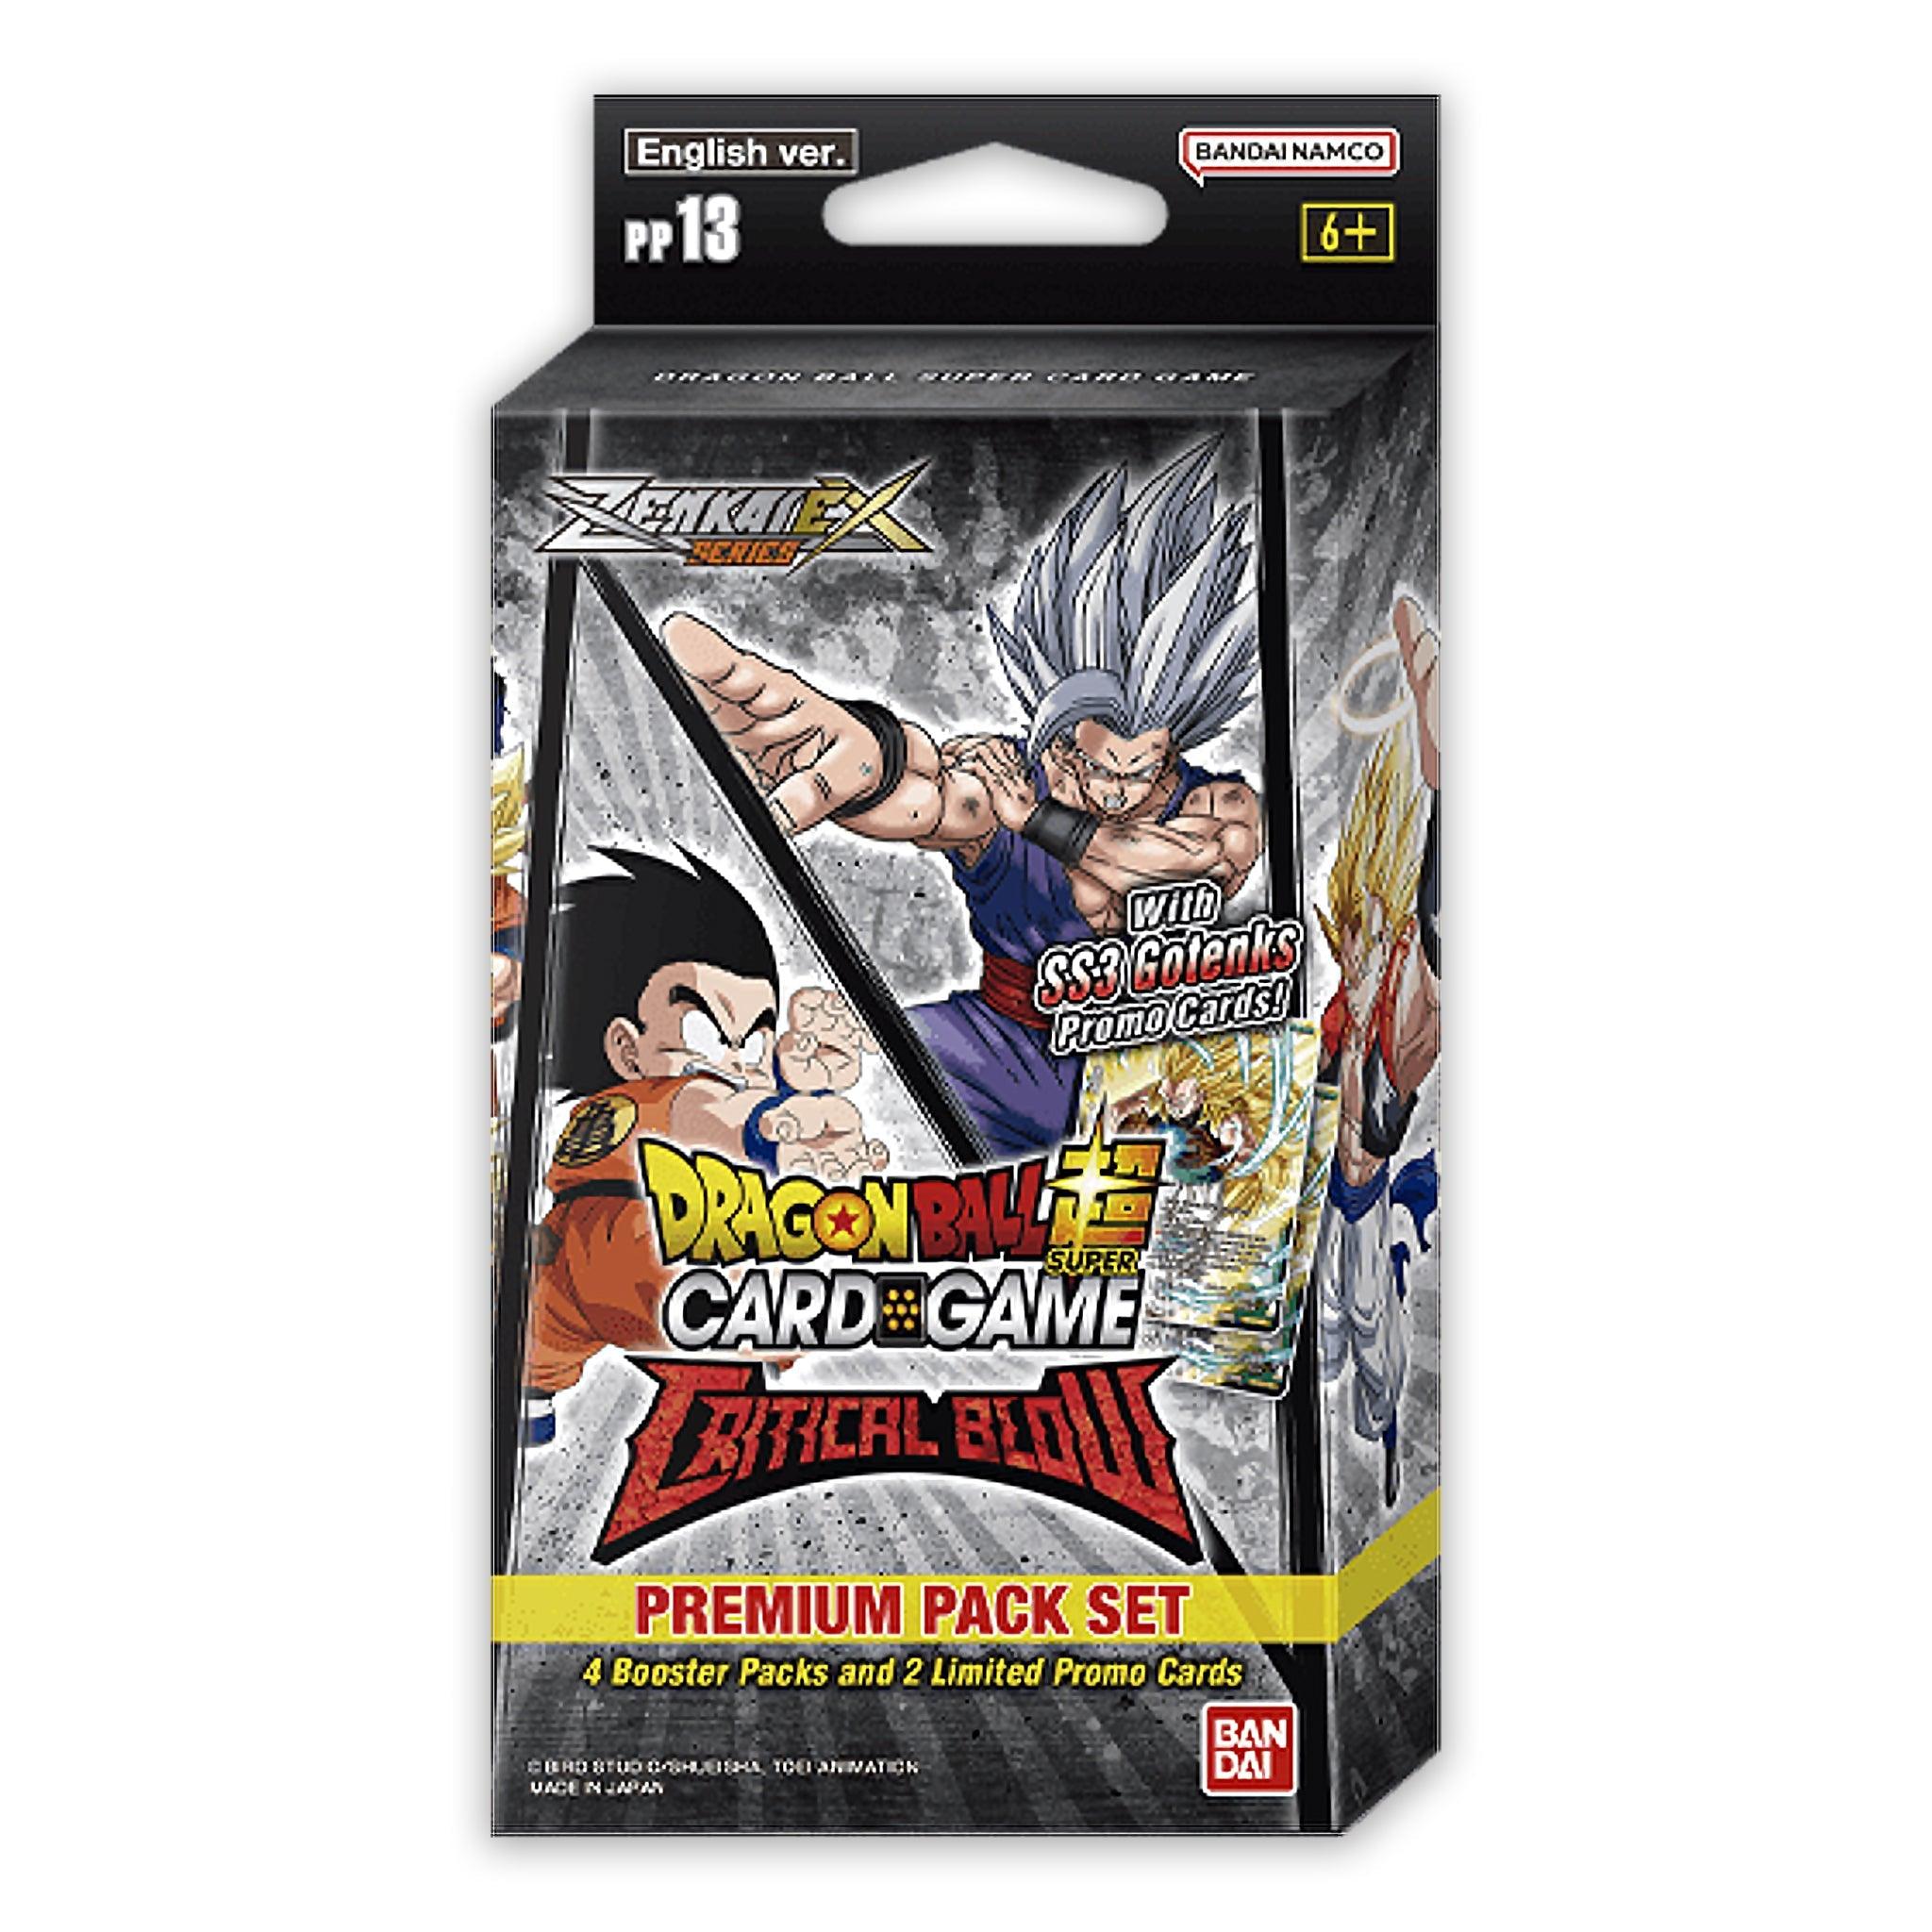 Dragon Ball Super: Zenkai Series Set 05 - Critical Blow - (PP13) Premium Pack: Display (8 Premium Packs) | Romulus Games